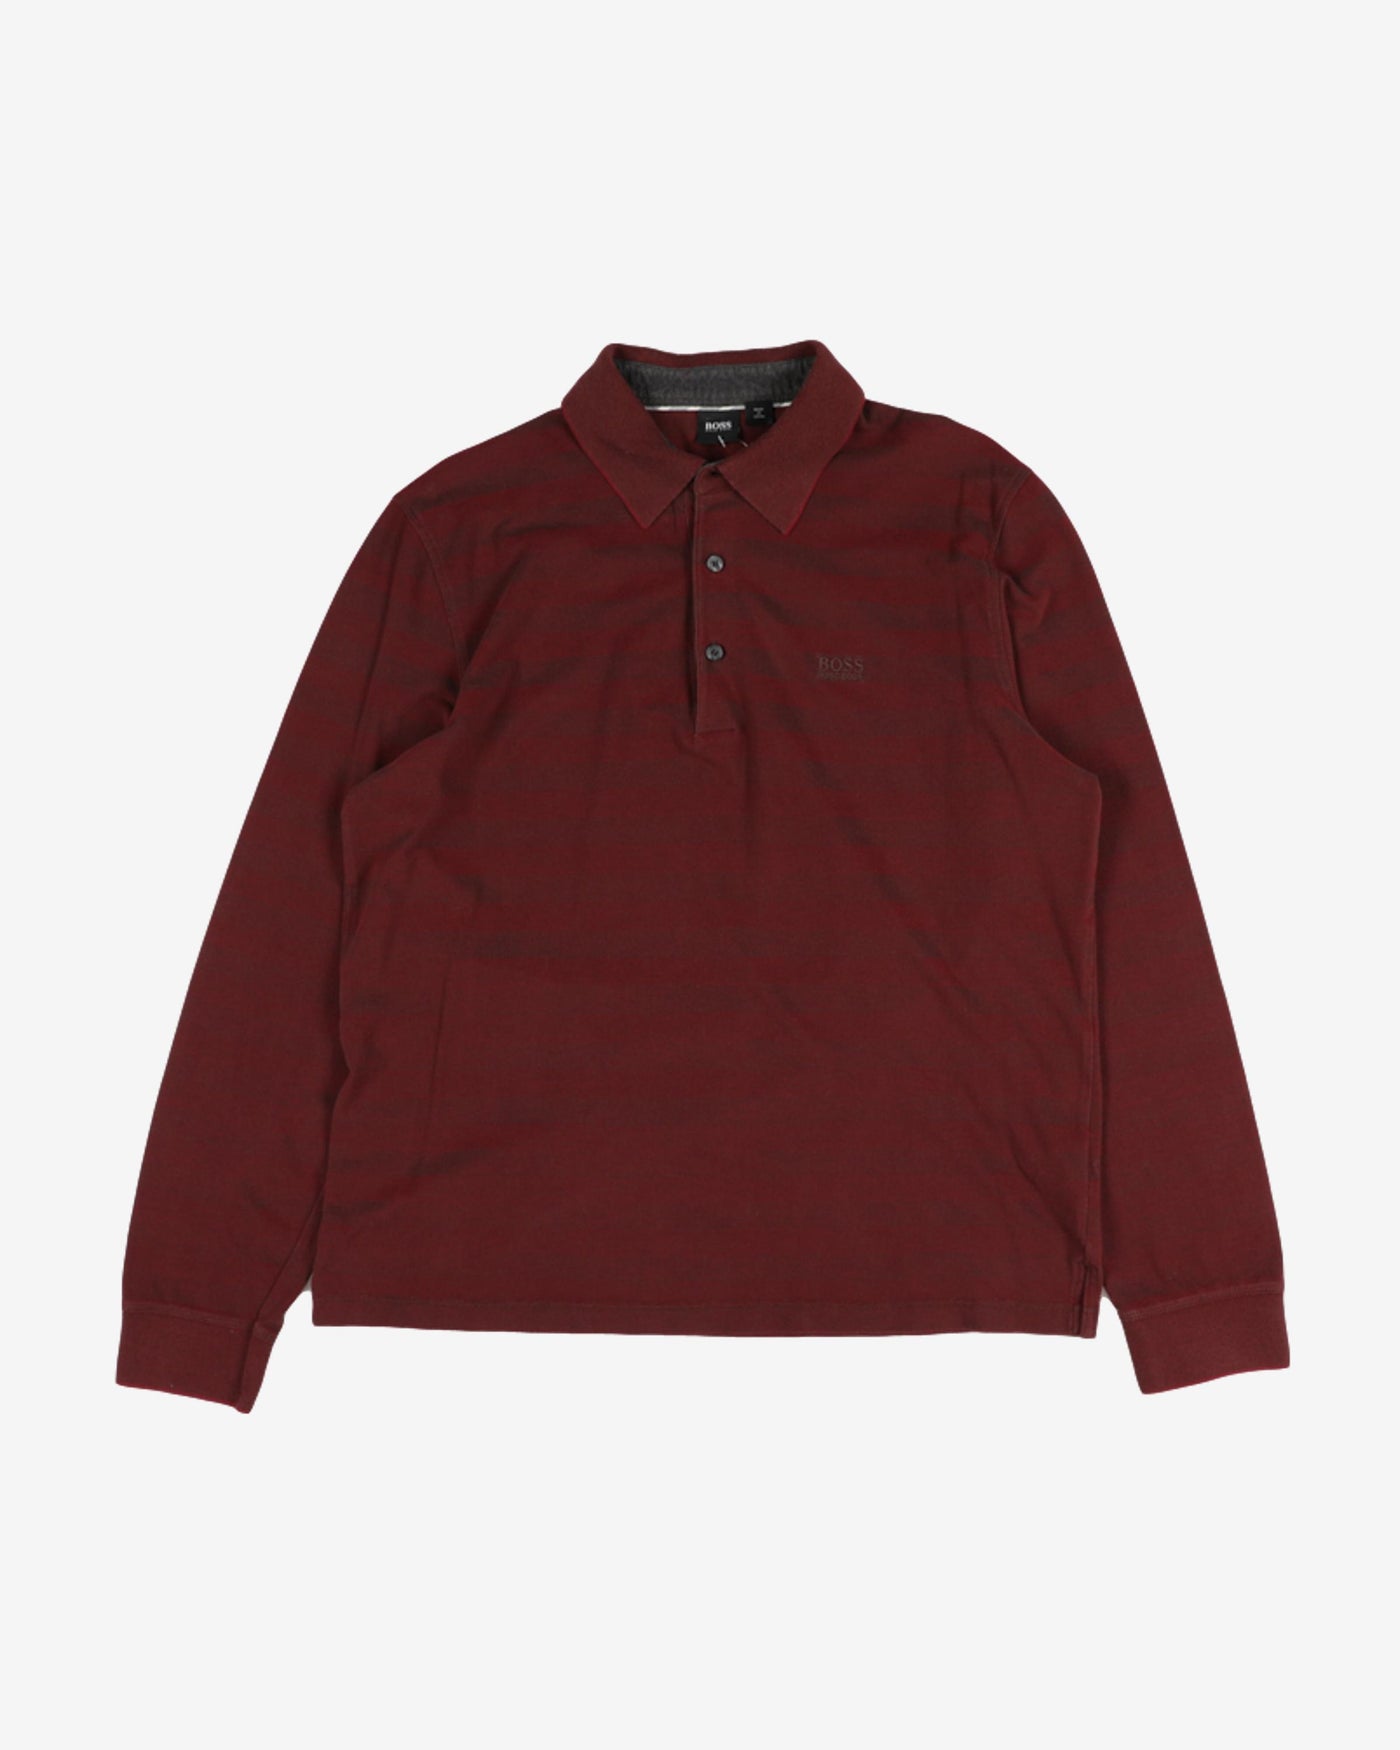 Long Sleeve Burgundy Hugo Boss Polo Shirt - XL